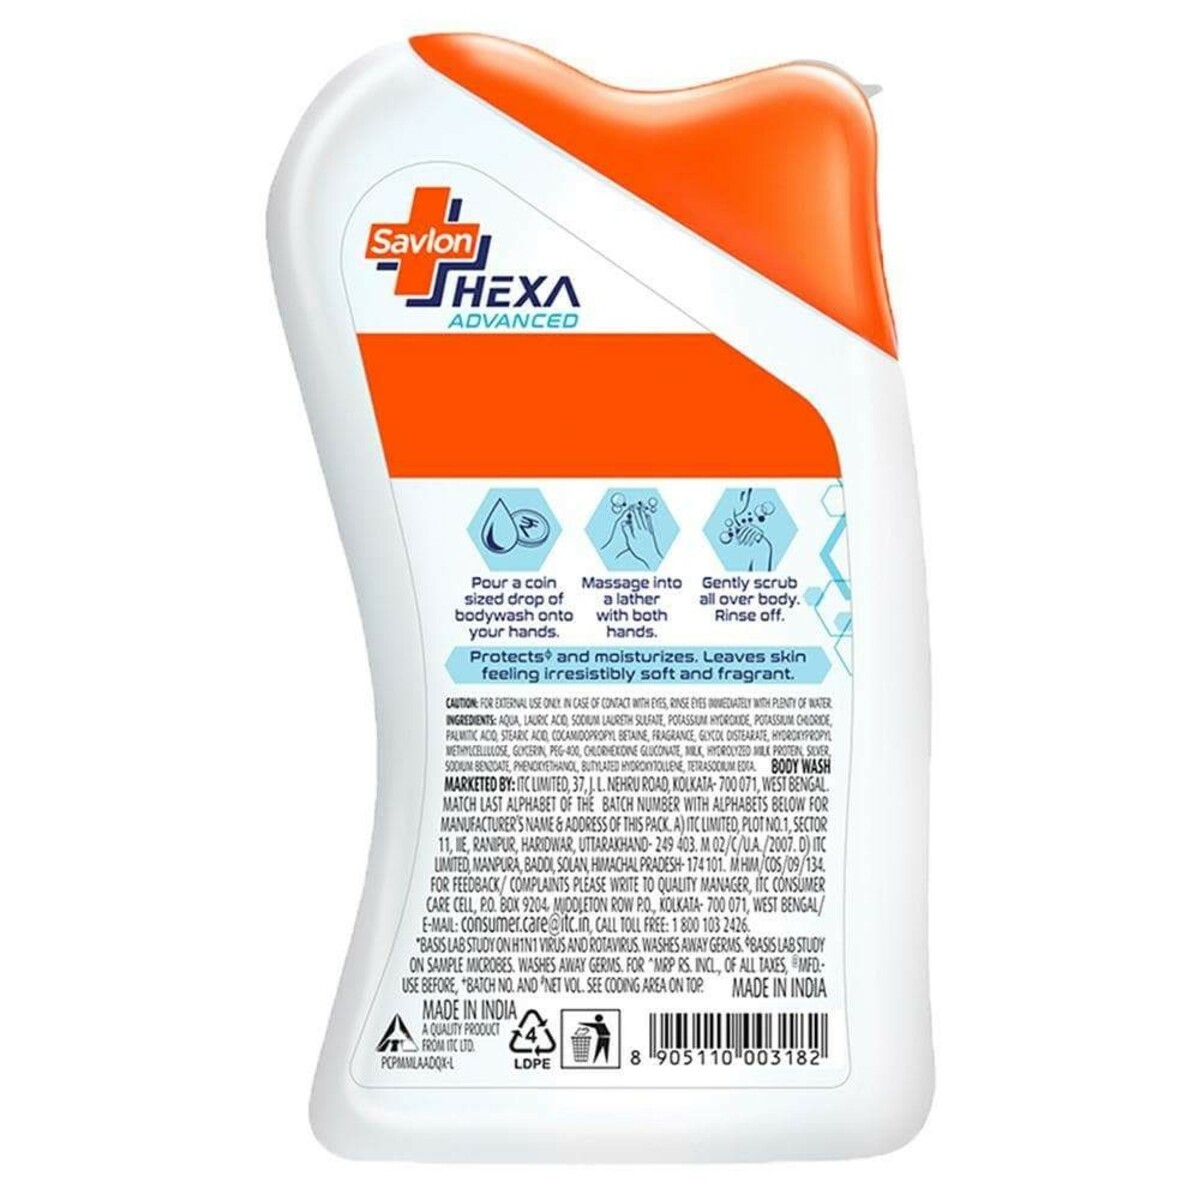 Savlon  Body Wash Hexa Advanced  Milk Protein  215ml